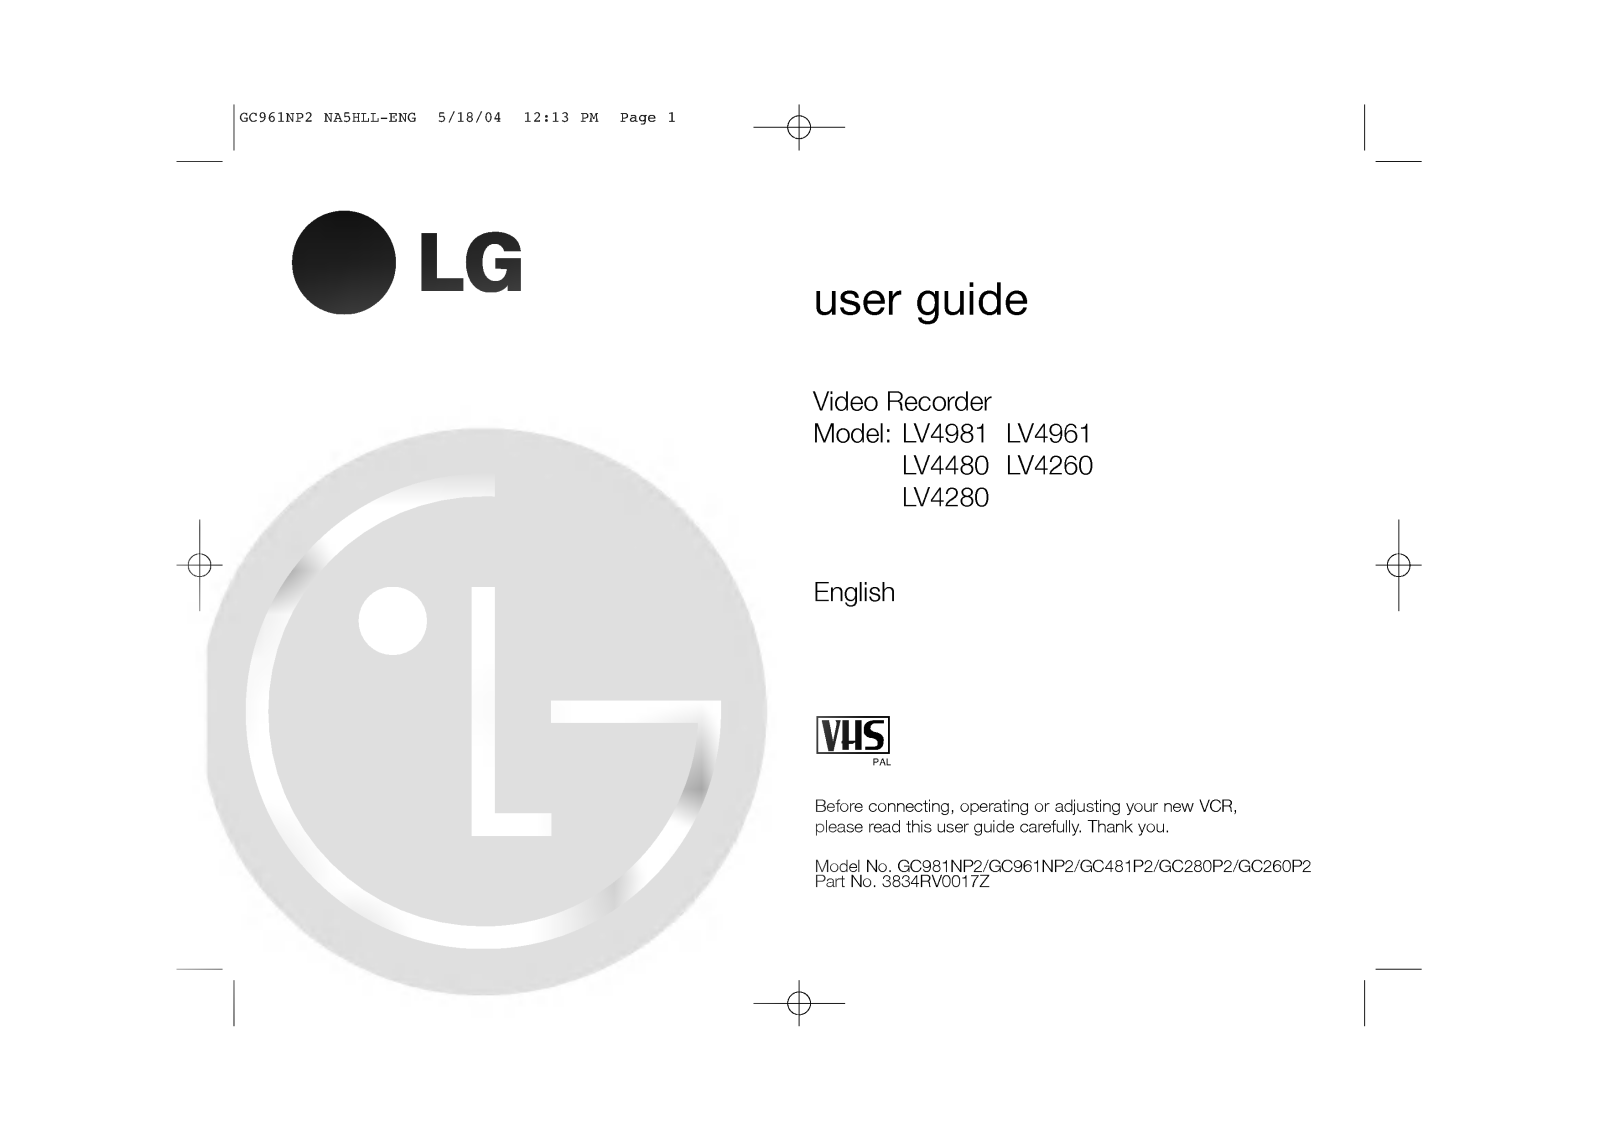 LG GC260P2 User Guide